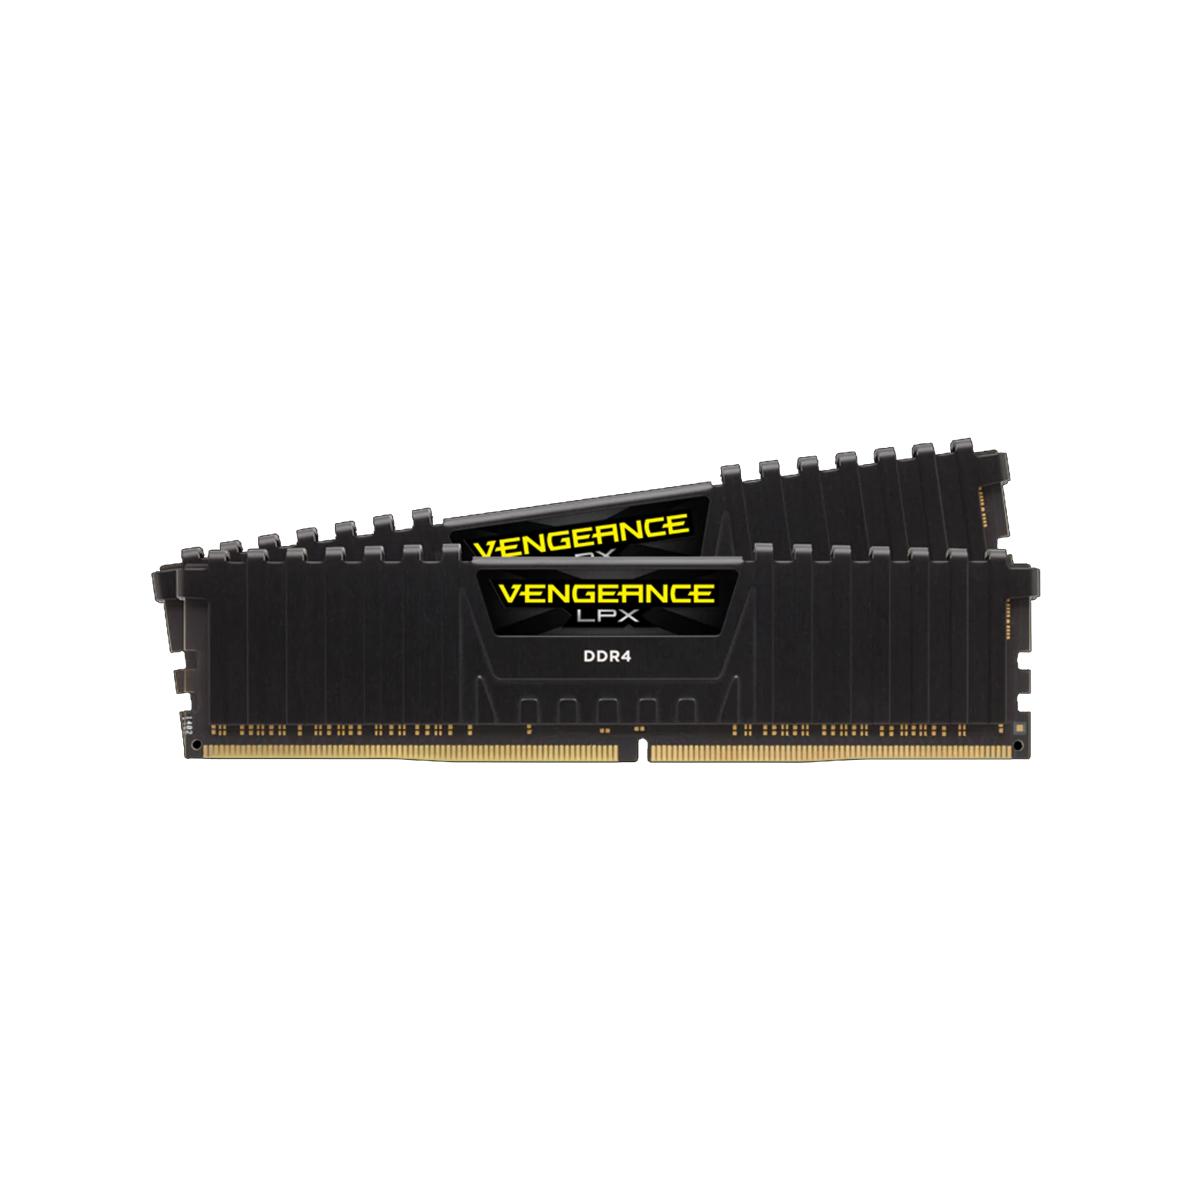 MEMORIA DIMM DDR4 CORSAIR (CMK16GX4M2A2666C16) 16GB 2666MHZ (2X8GB) VENGEANCE LPX, NEGRO - CMK16GX4M2A2666C16